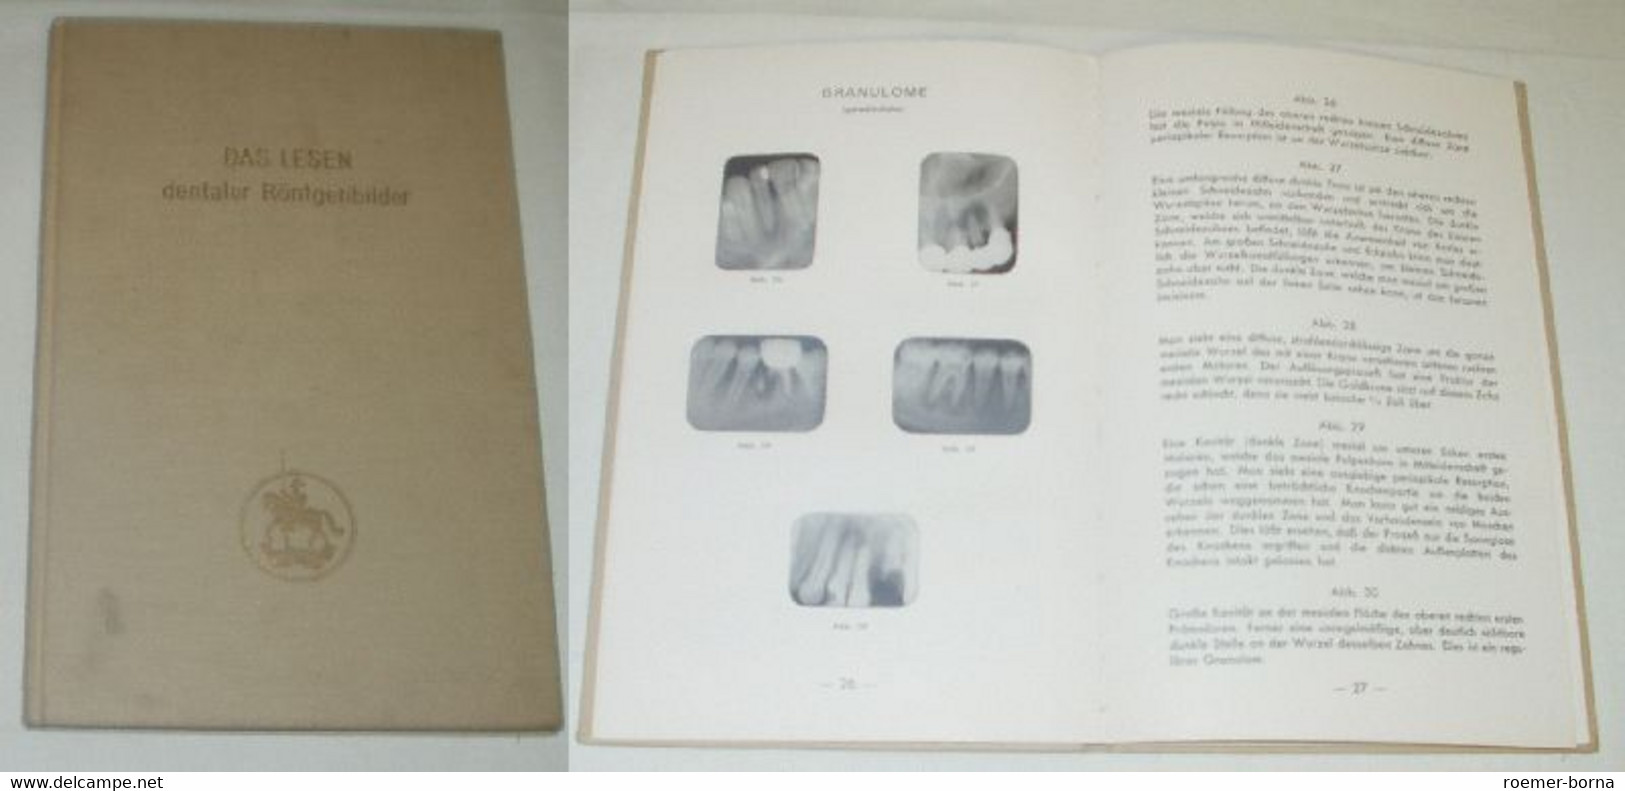 Das Lesen Dentaler Röntgenbilder - Gezondheid & Medicijnen